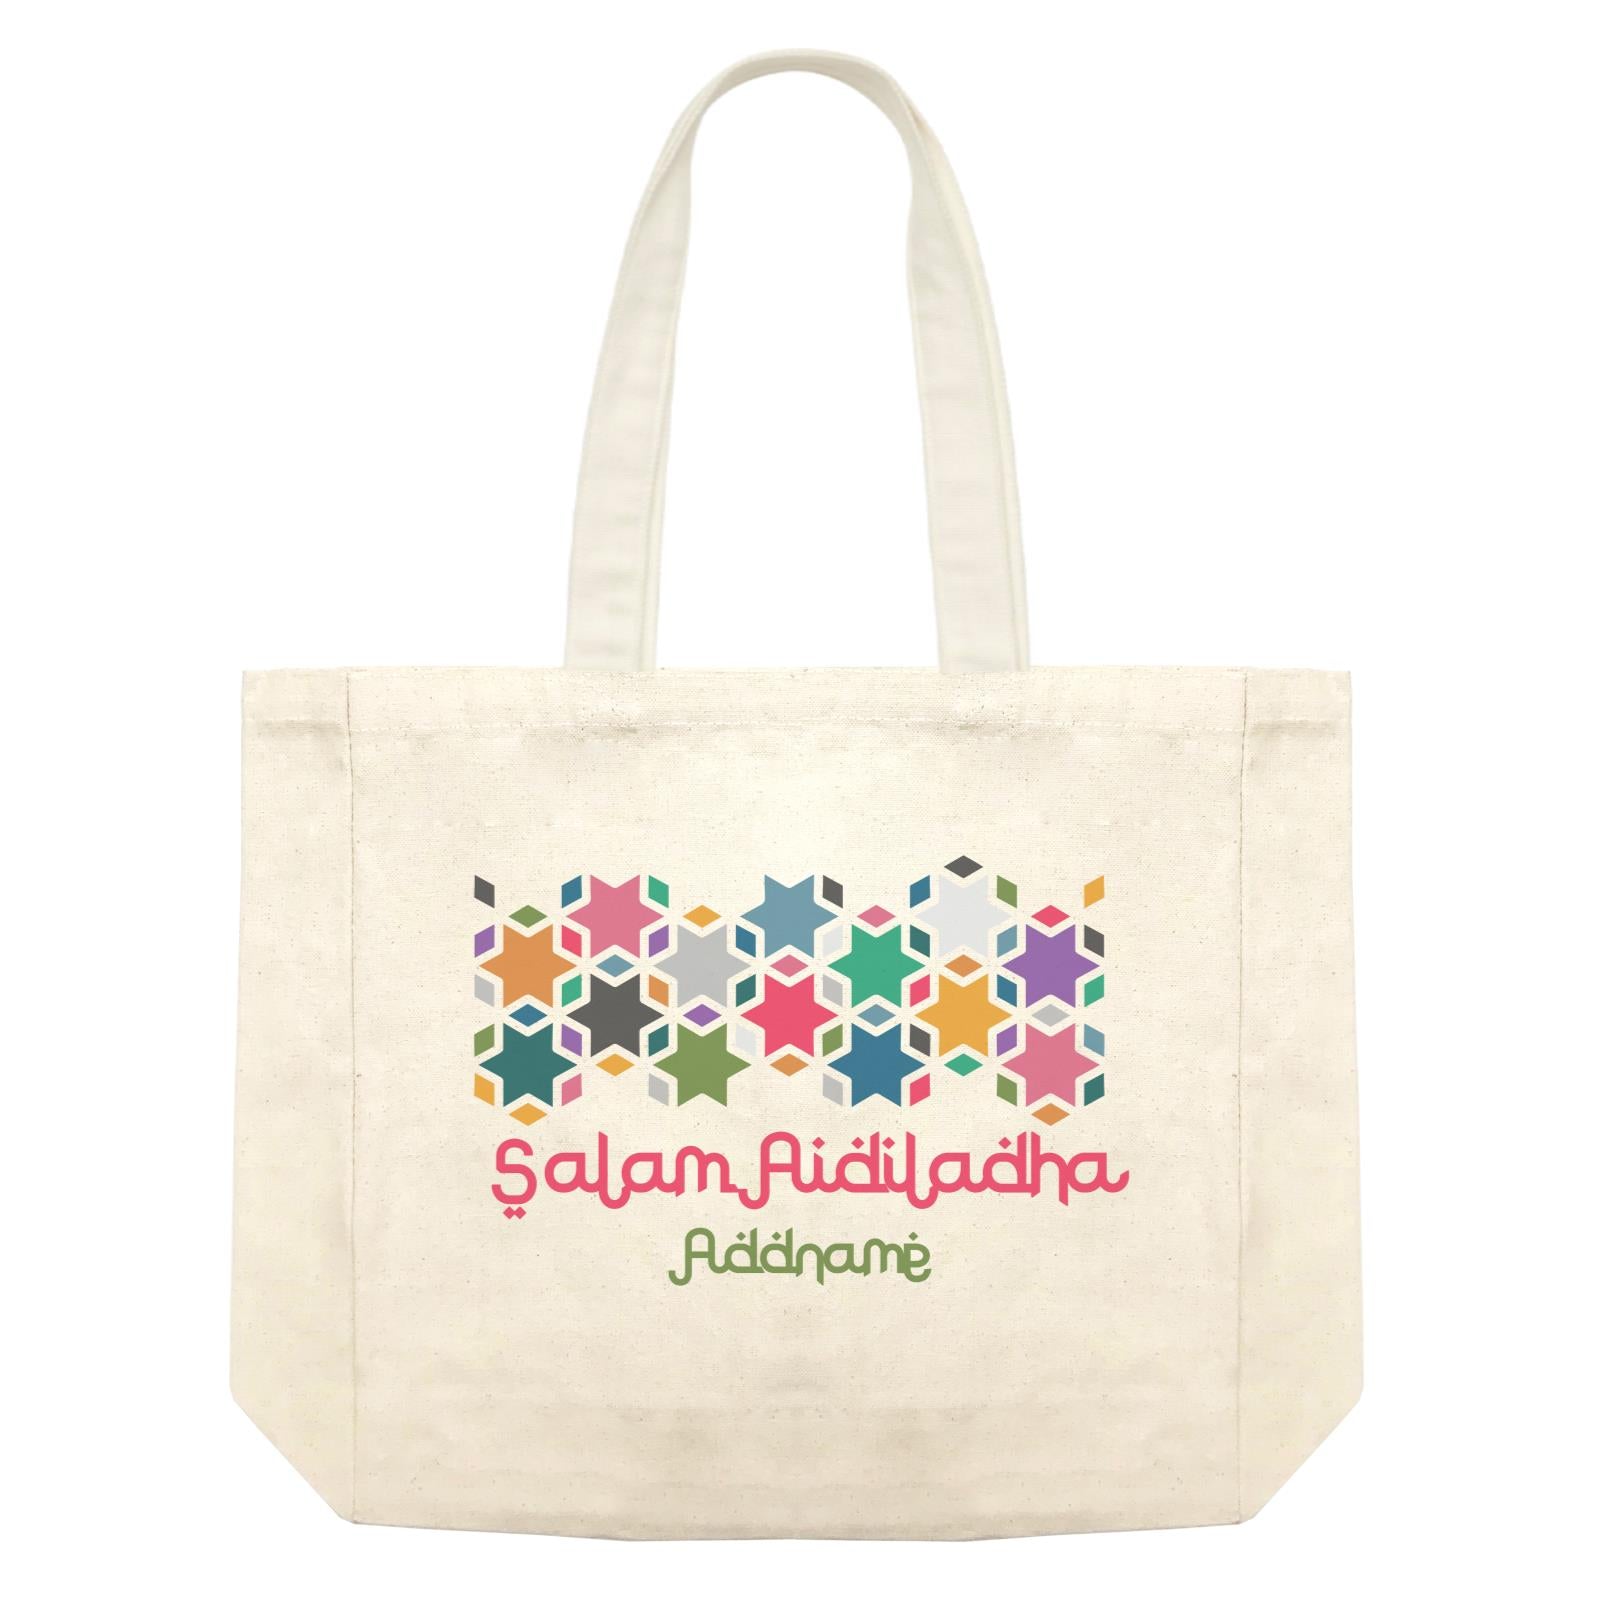 Salam Aidiladha Star Motifs Addname Shopping Bag